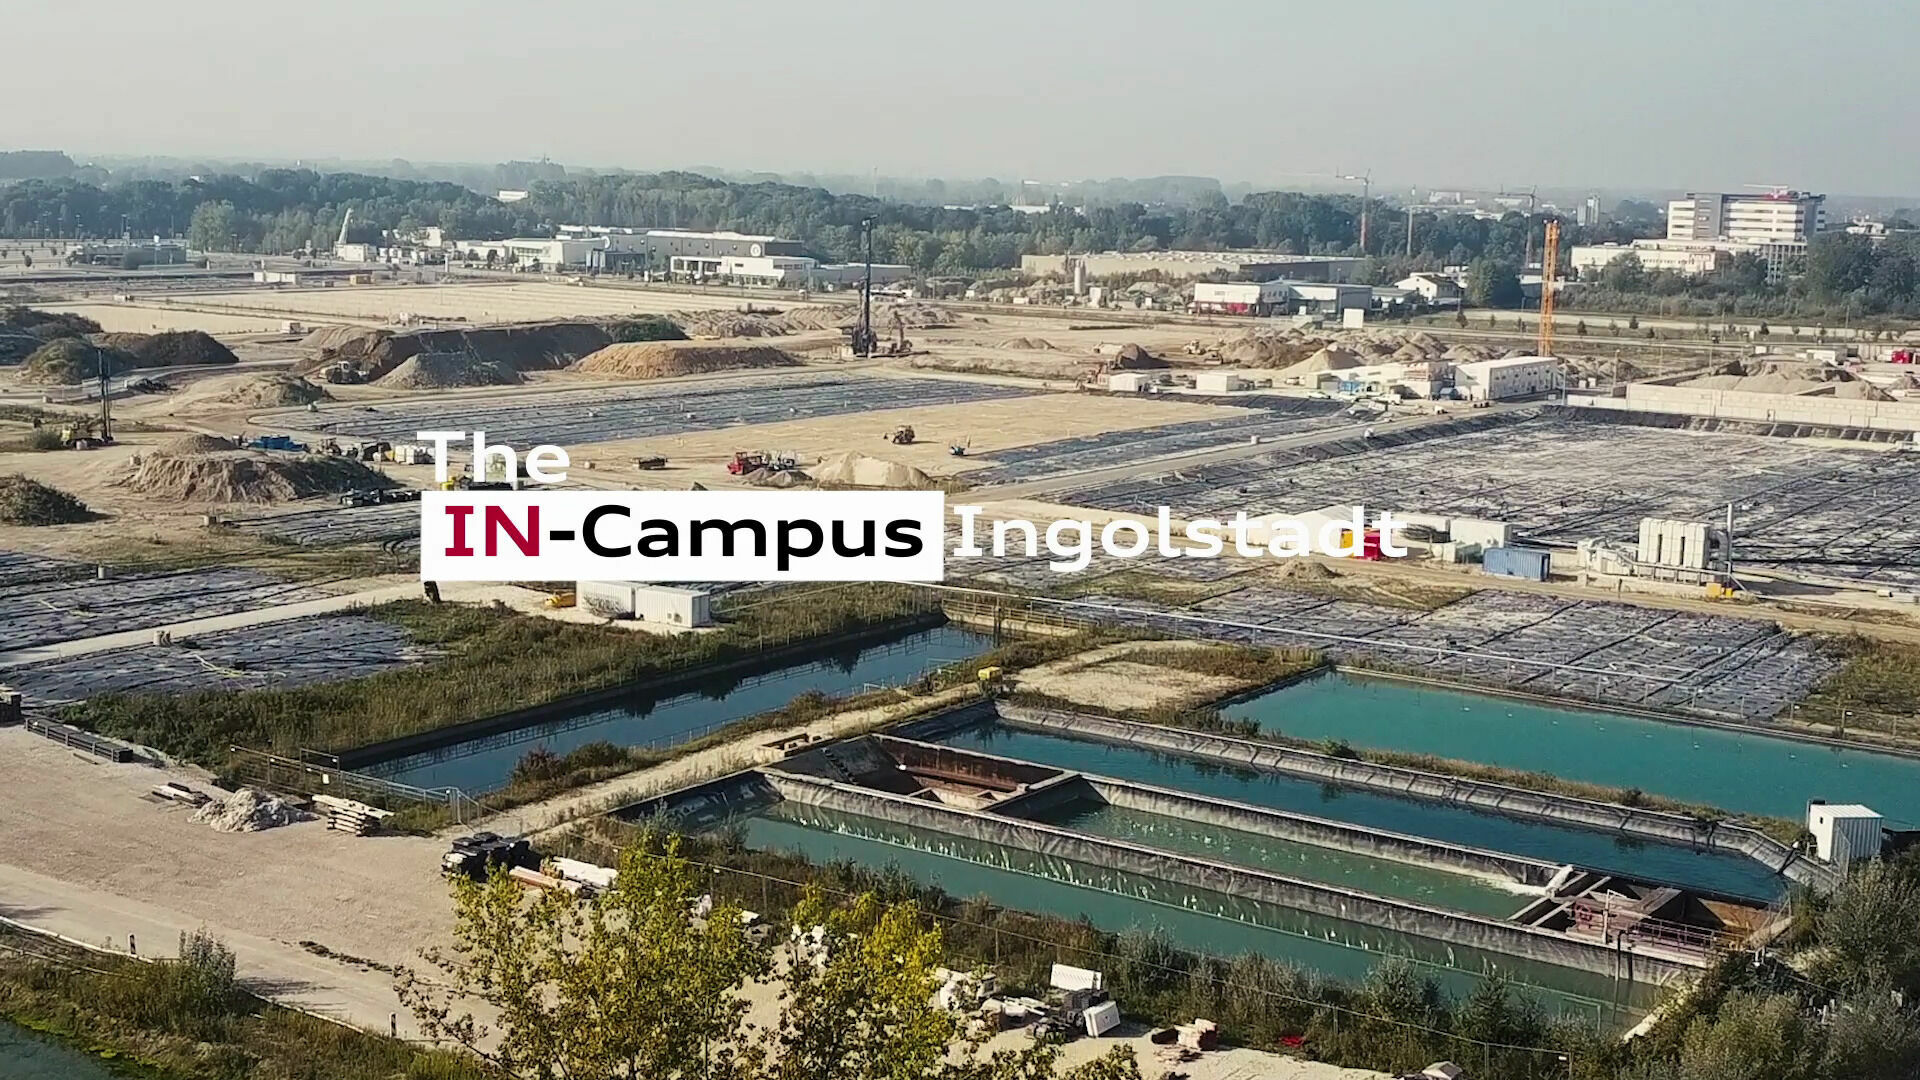 The IN-Campus in Ingolstadt